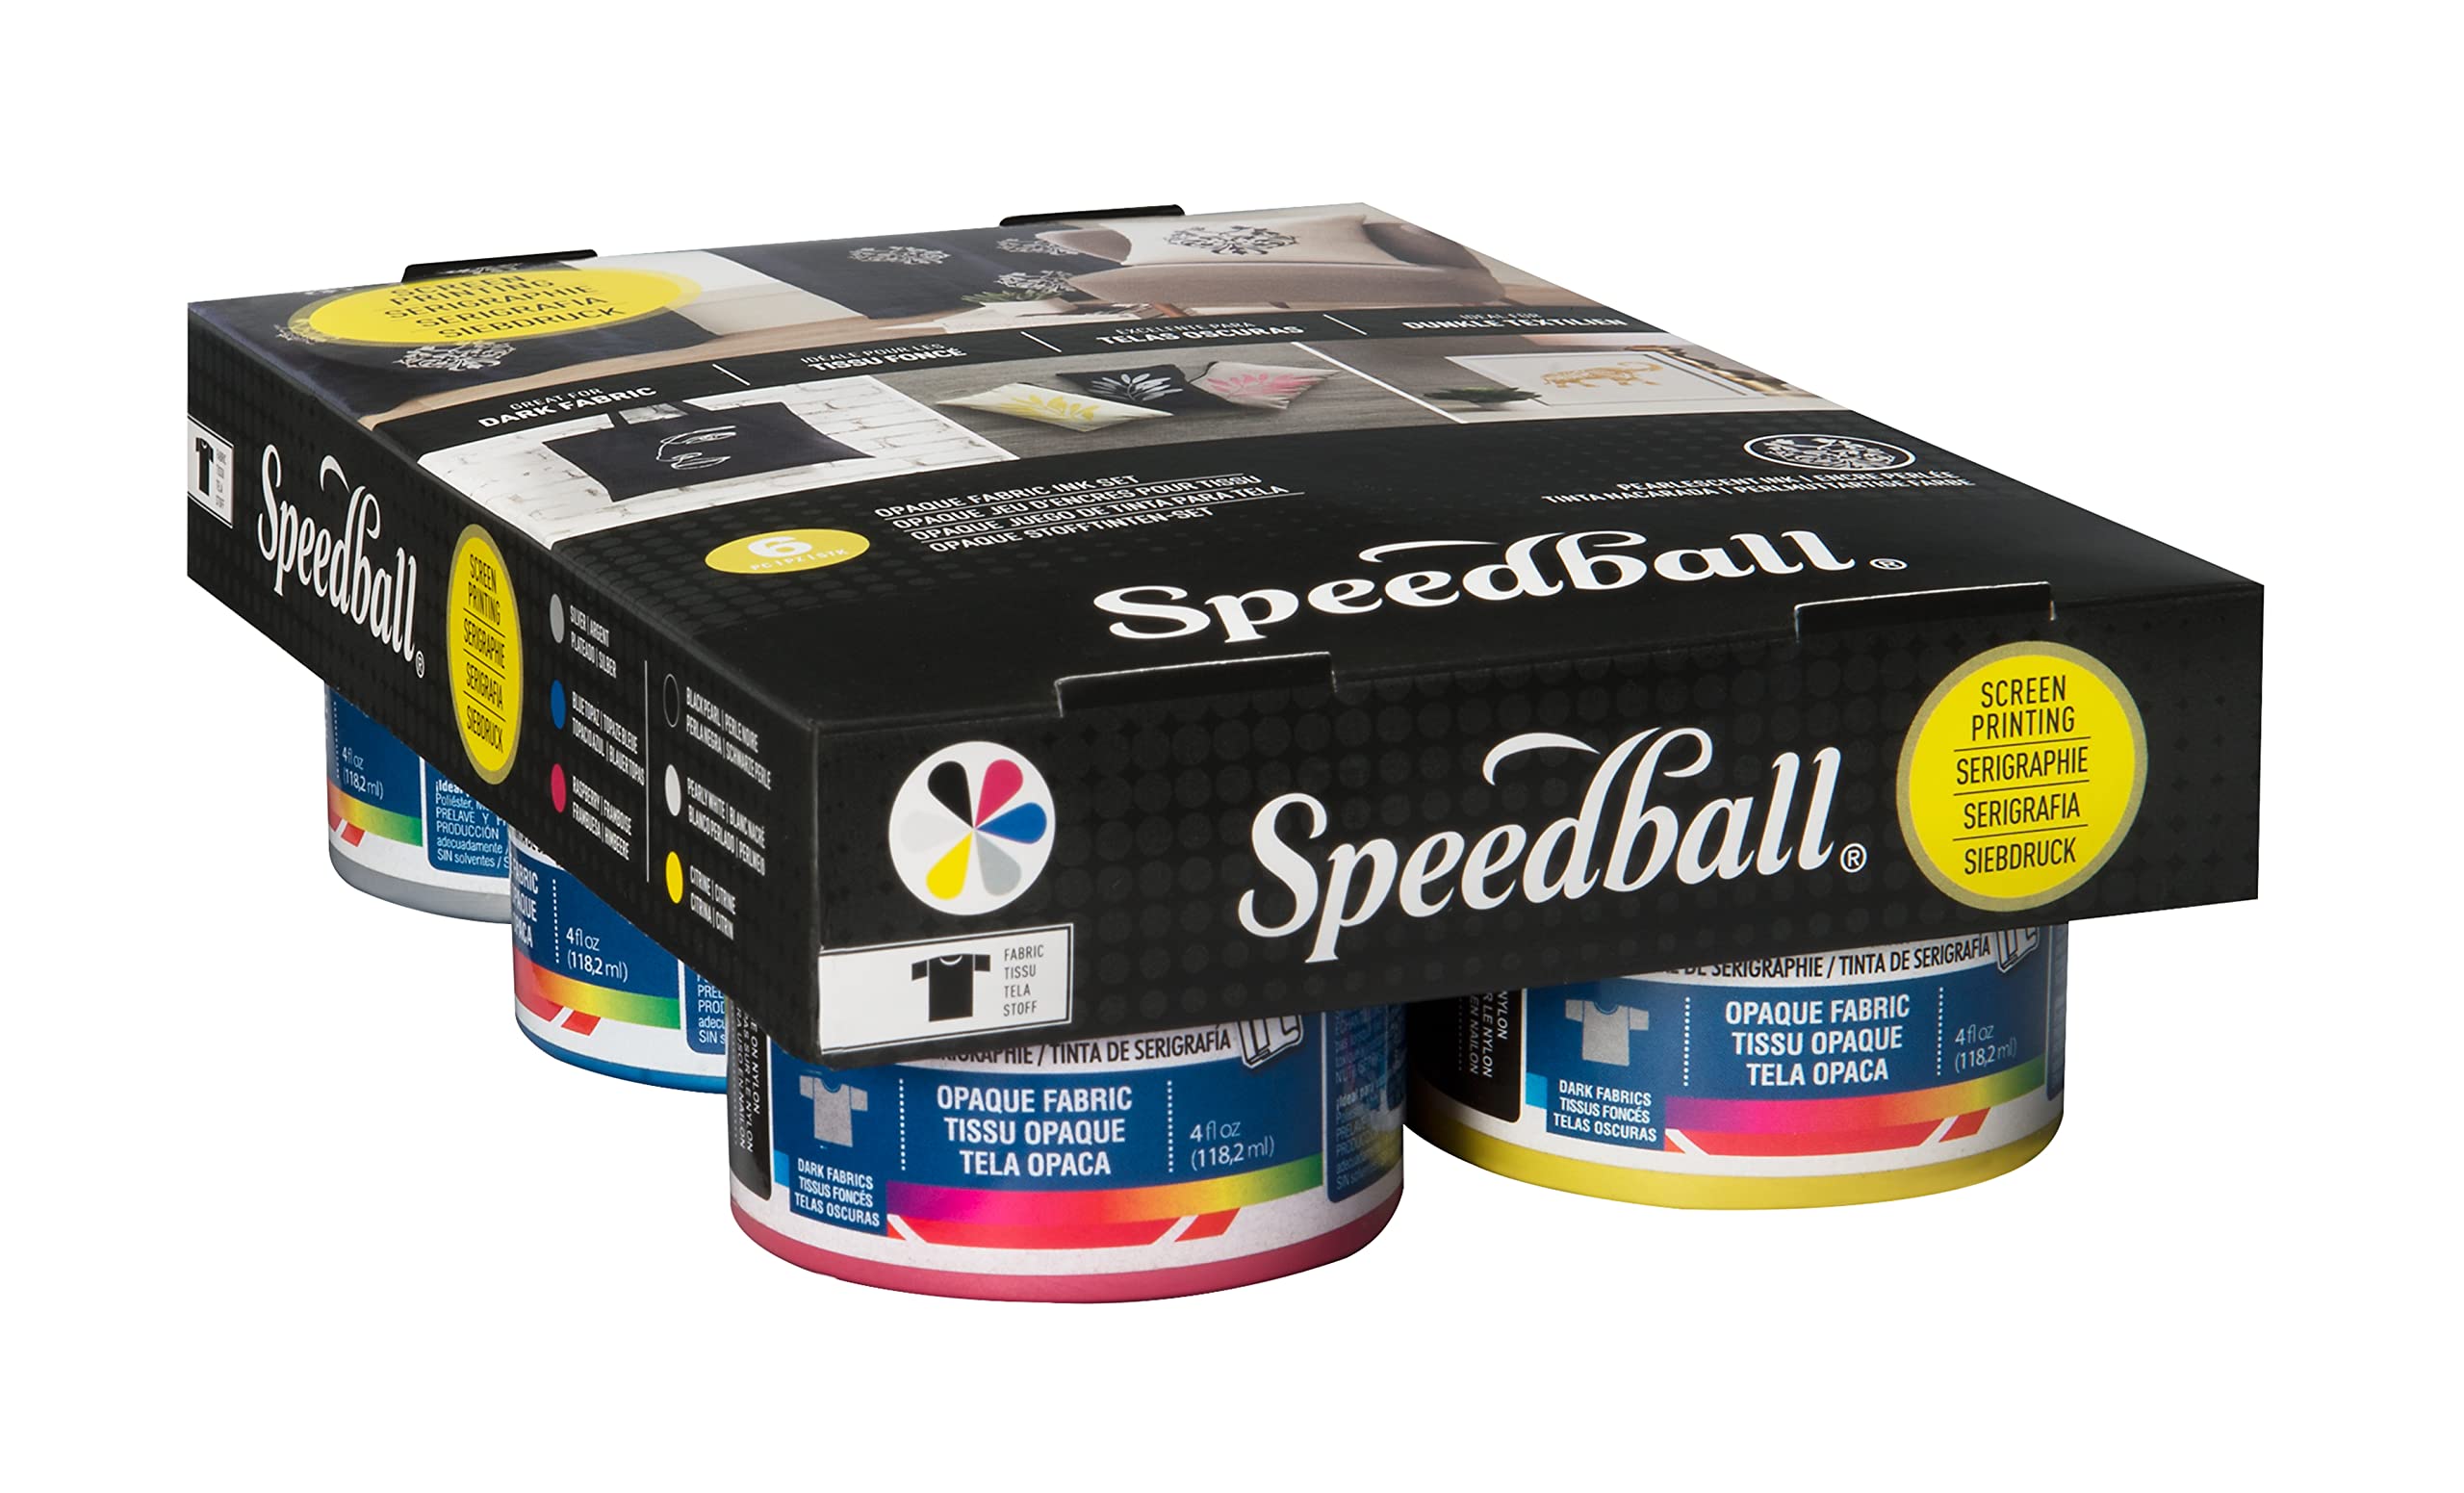 Speedball Fabric Screen Printing Set of 4 - Basic Colors